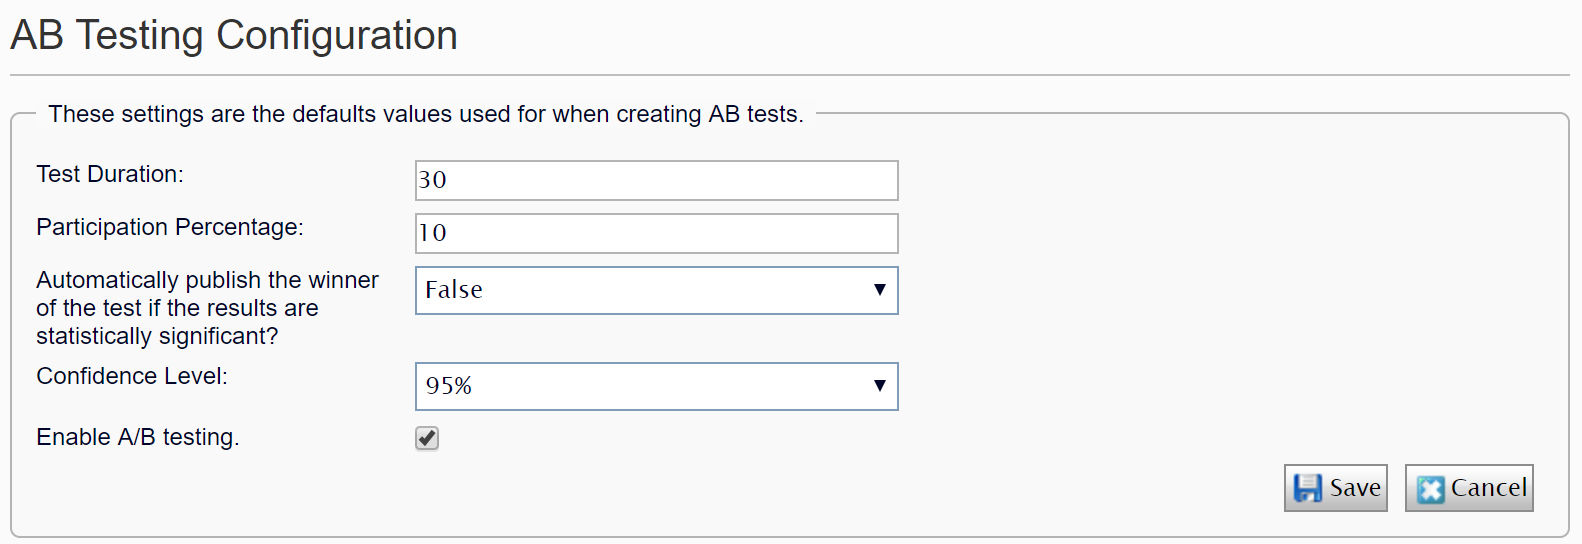 Image: AB Testing Configuration screen